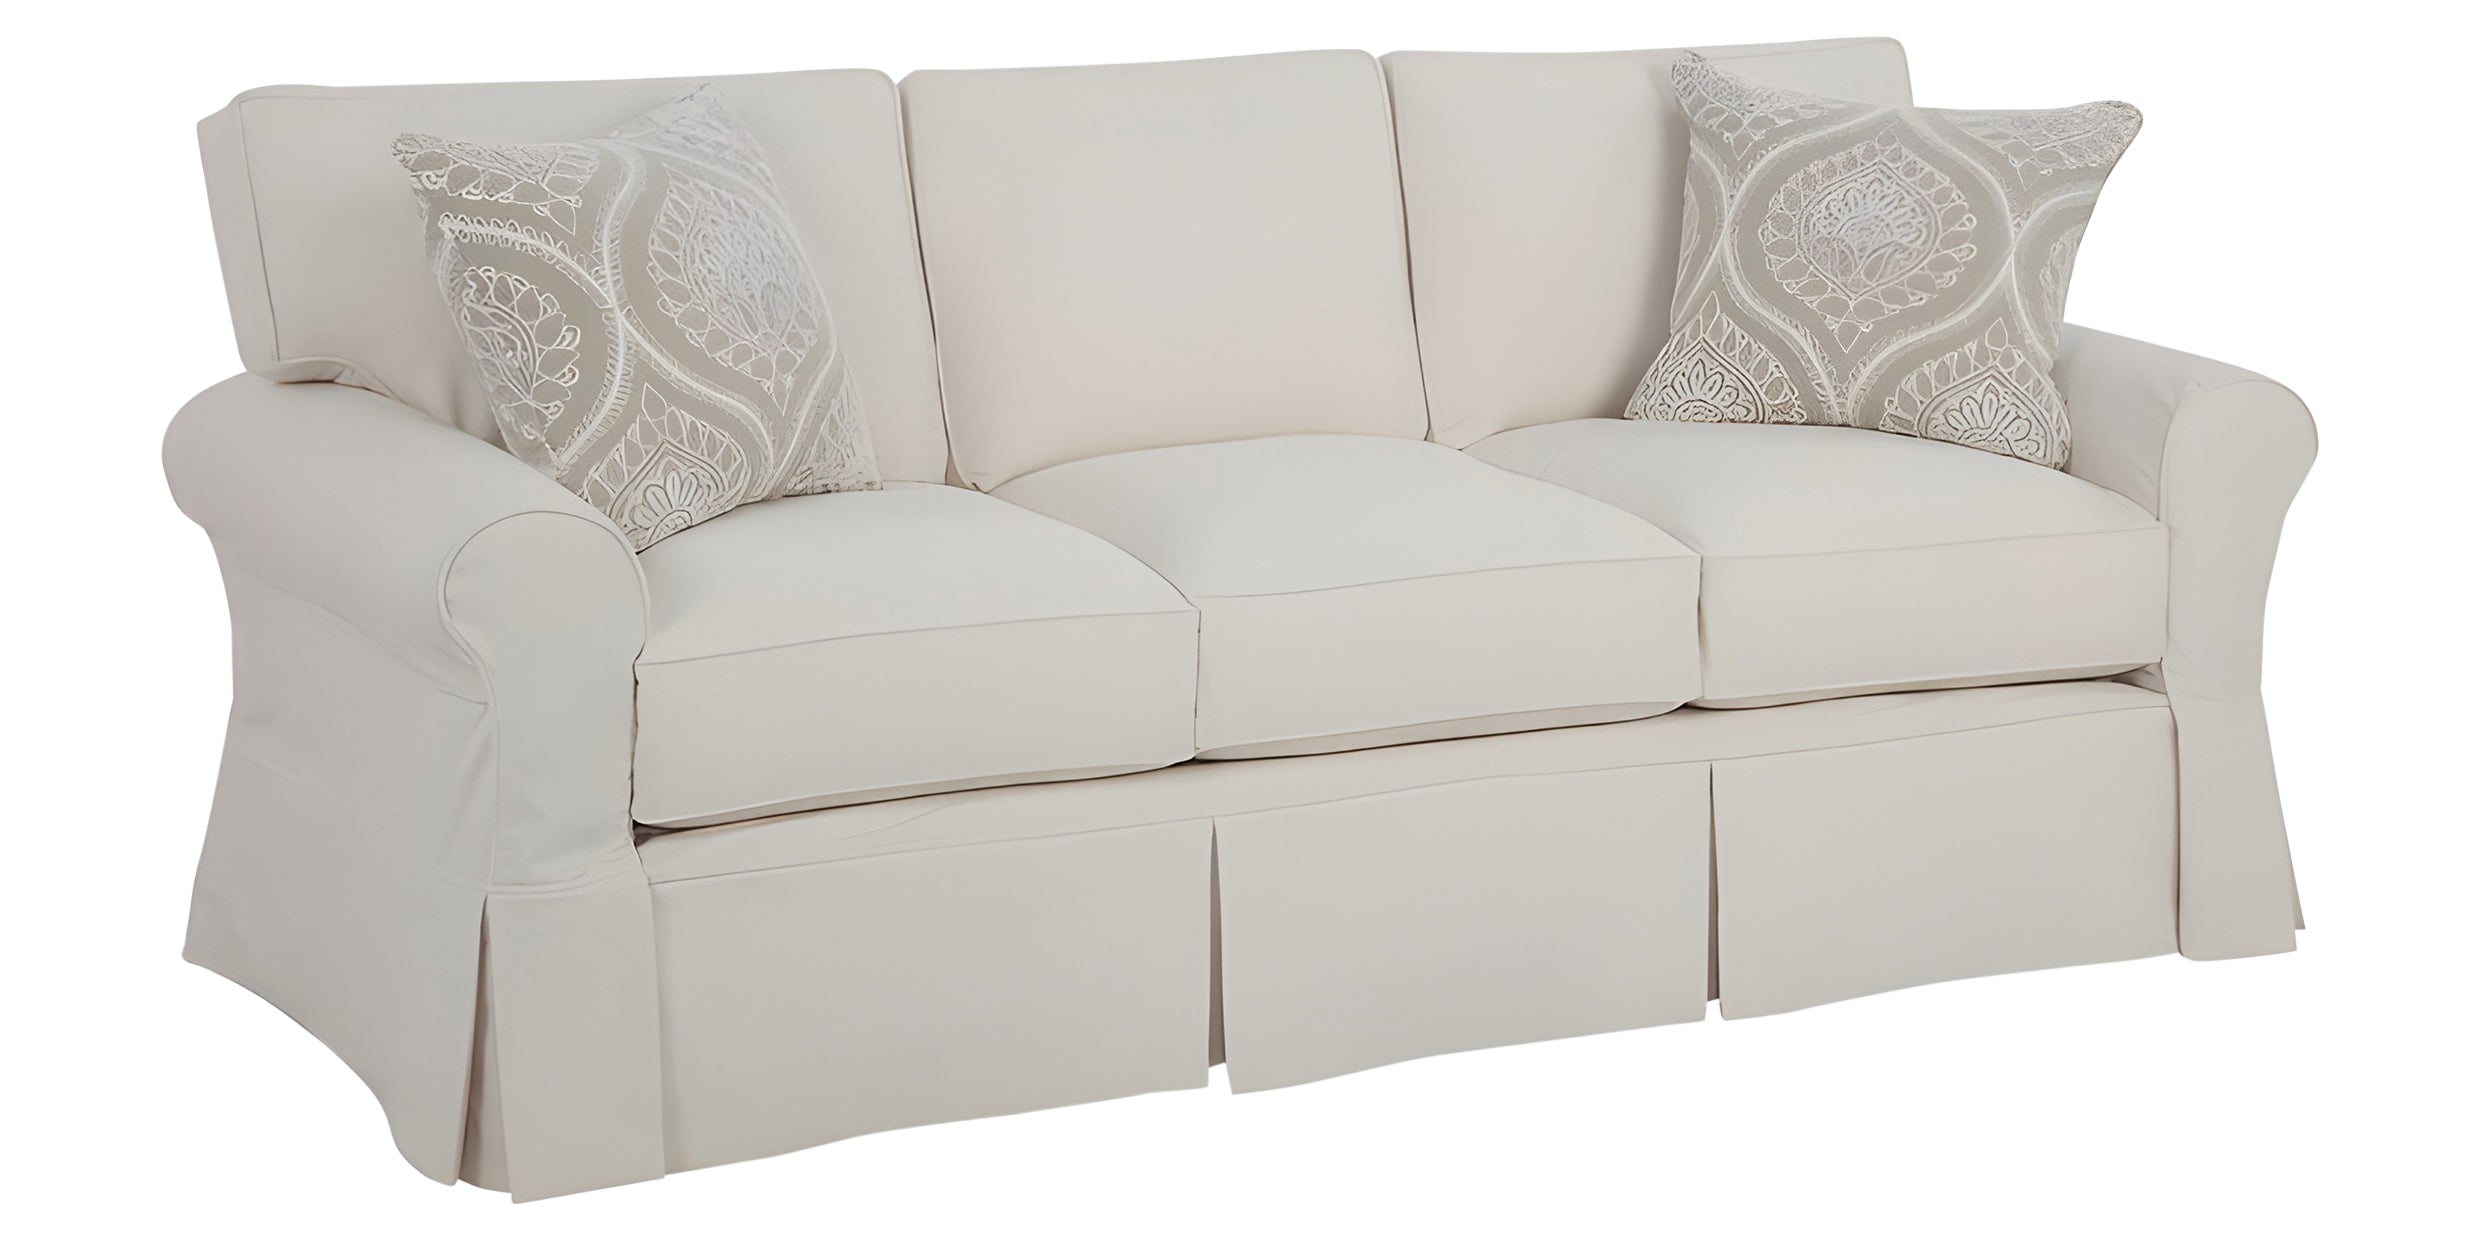 3 Seat Sofa | Four Seasons Alexandria Sofa | Valley Ridge Furniture